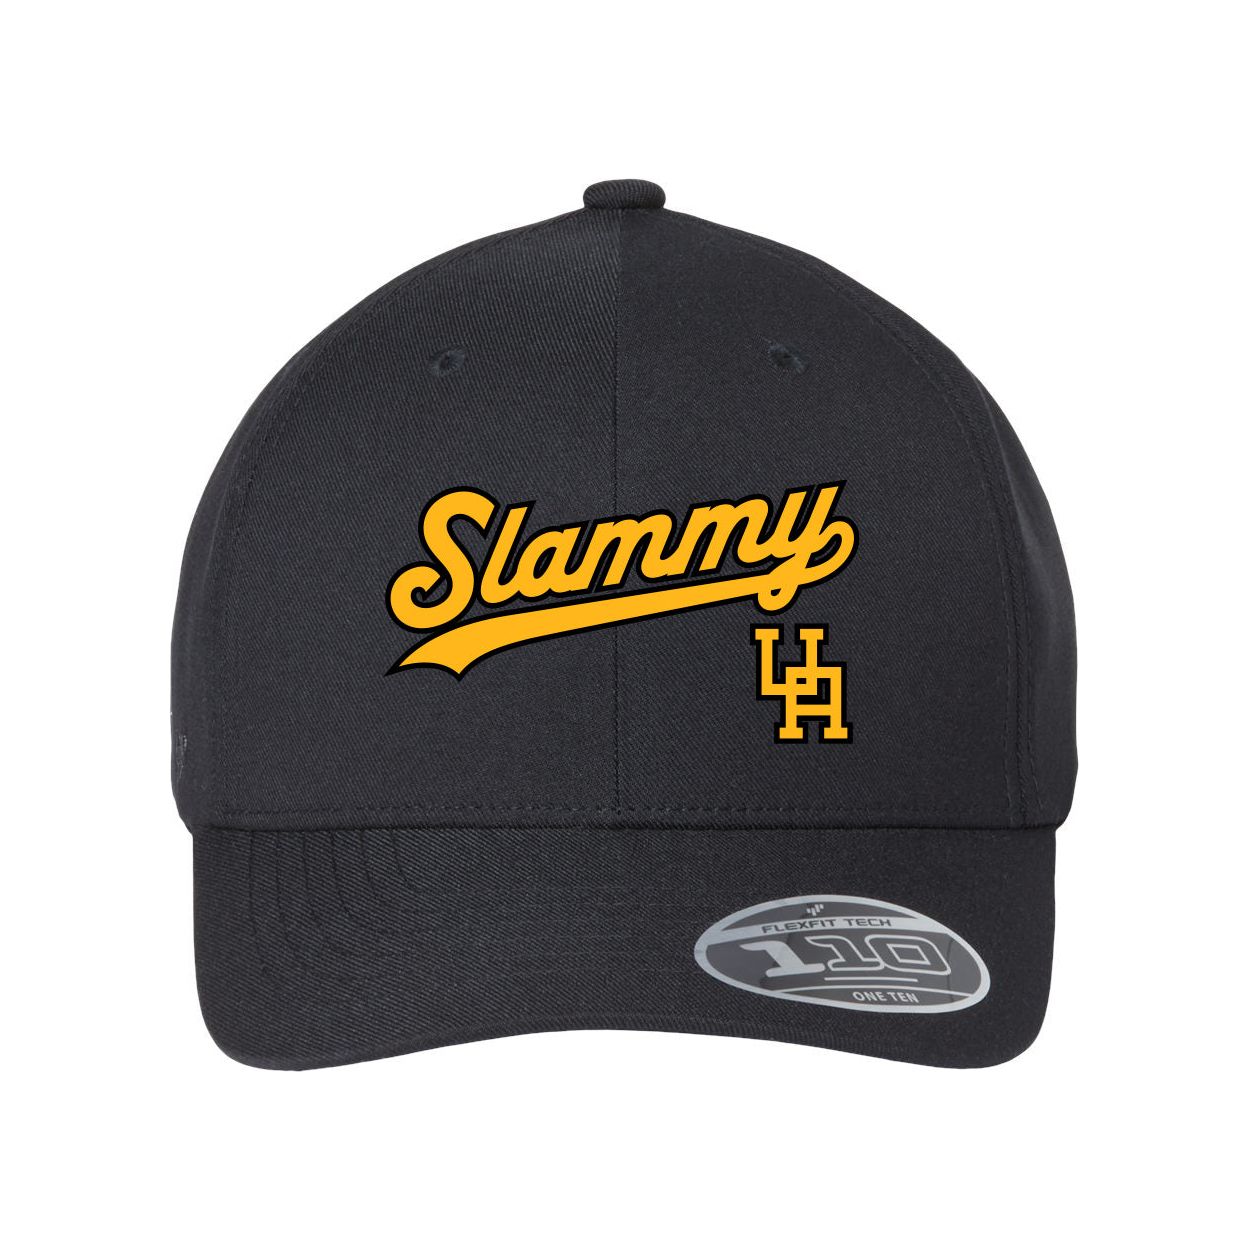 Slammy's Nike Hat